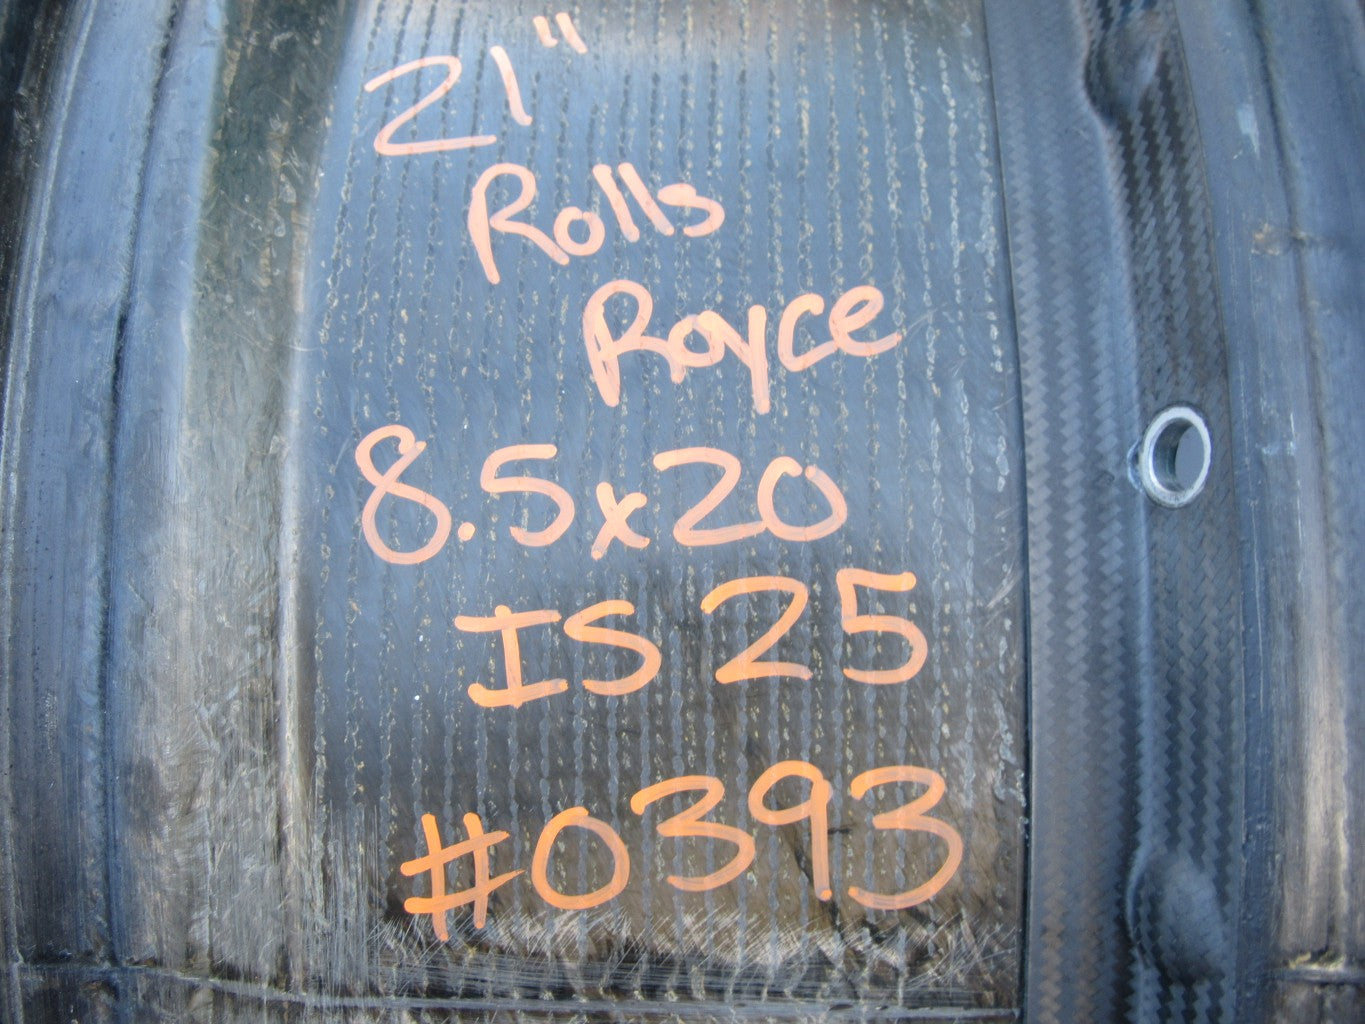 21" Rolls Royce front rim wheel carbon #0393